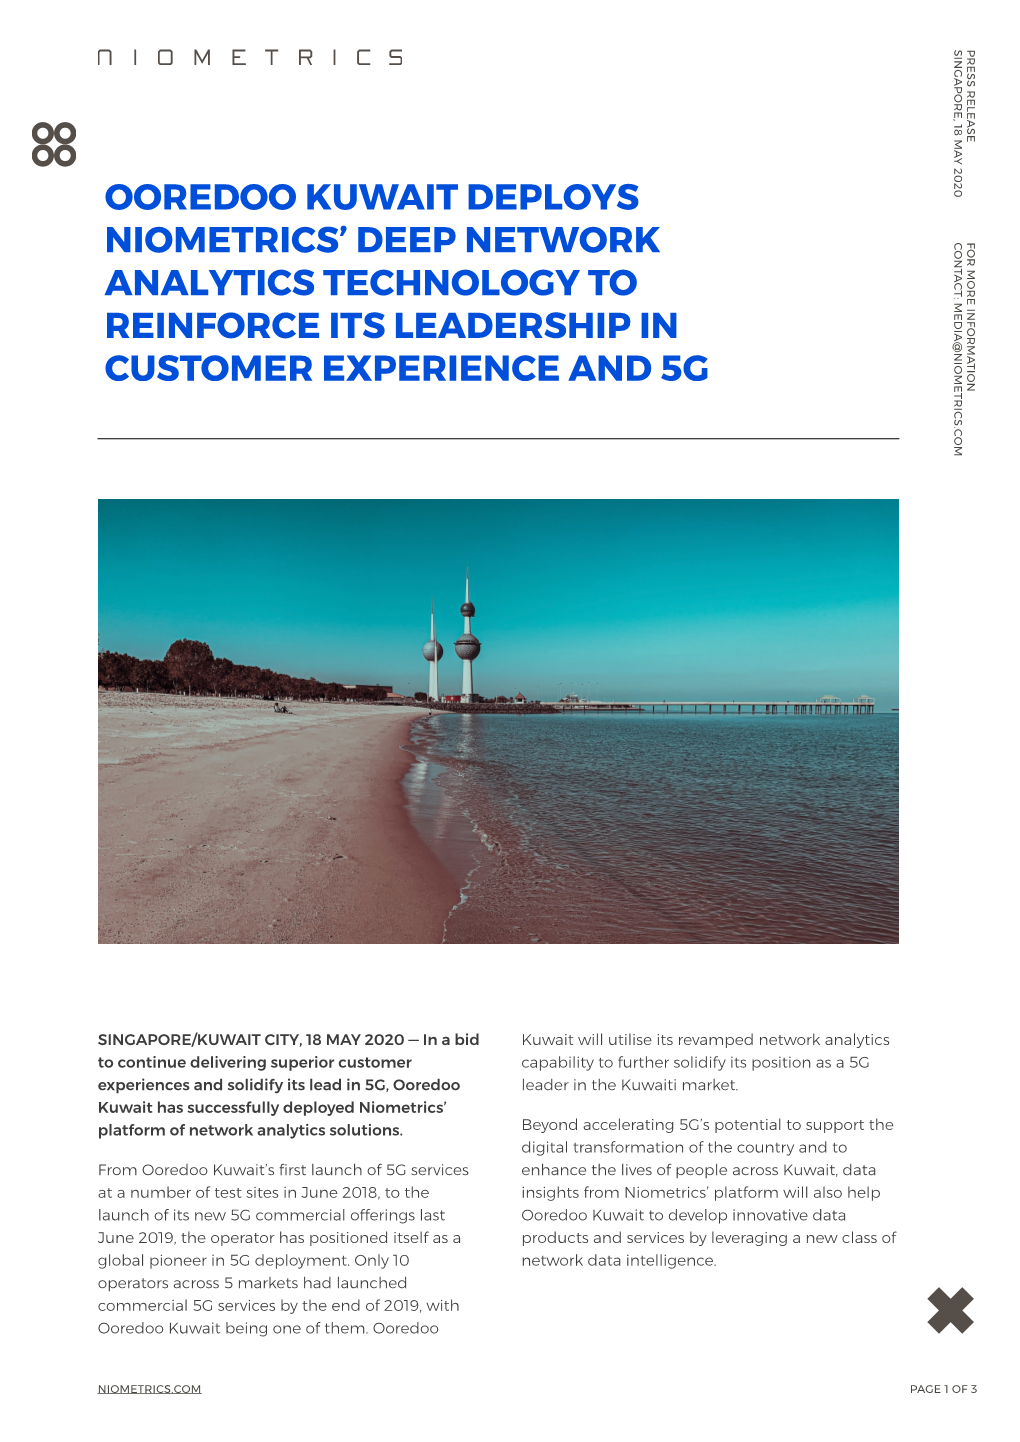 Ooredoo Kuwait Deploys Niometrics' Deep Network Analytics Technology to Reinforce Its Leadership in Customer Experience and 5G